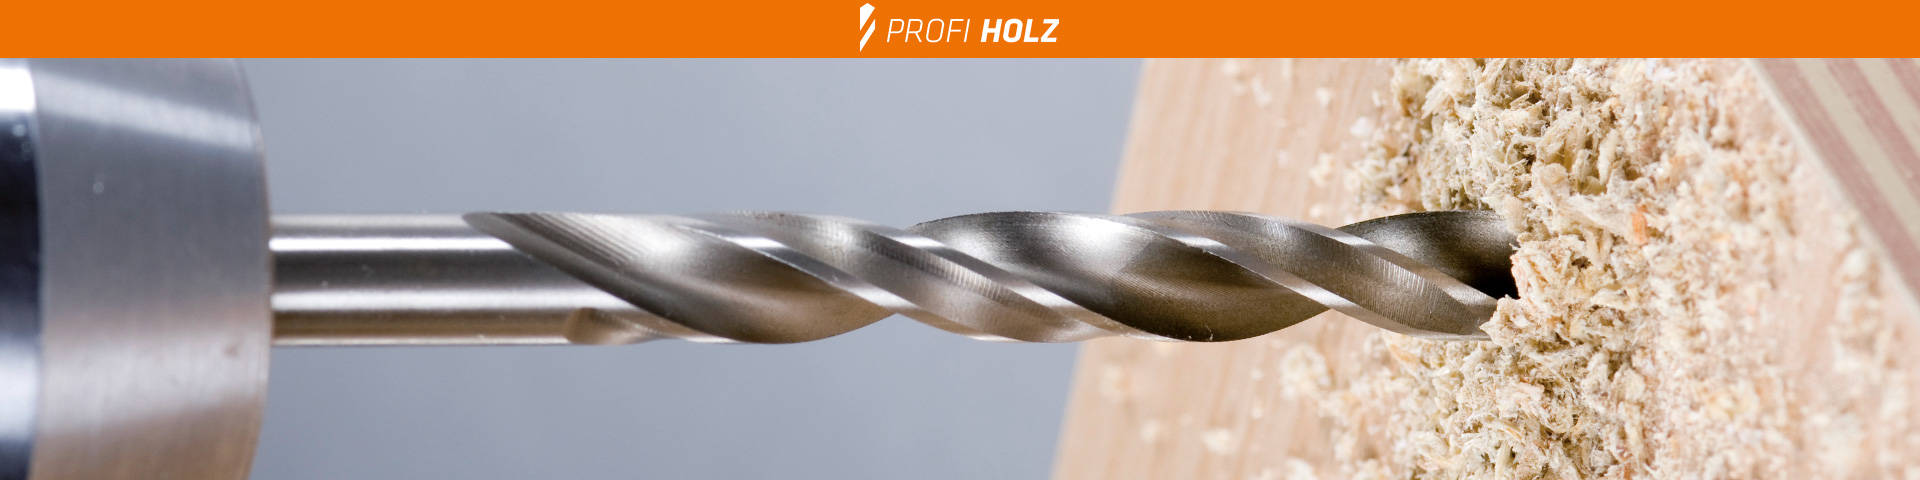 4X 75 mm acciaio cromo vanadio Alpen Punta Trapano per Legno Profi Holz 616 ØxL 